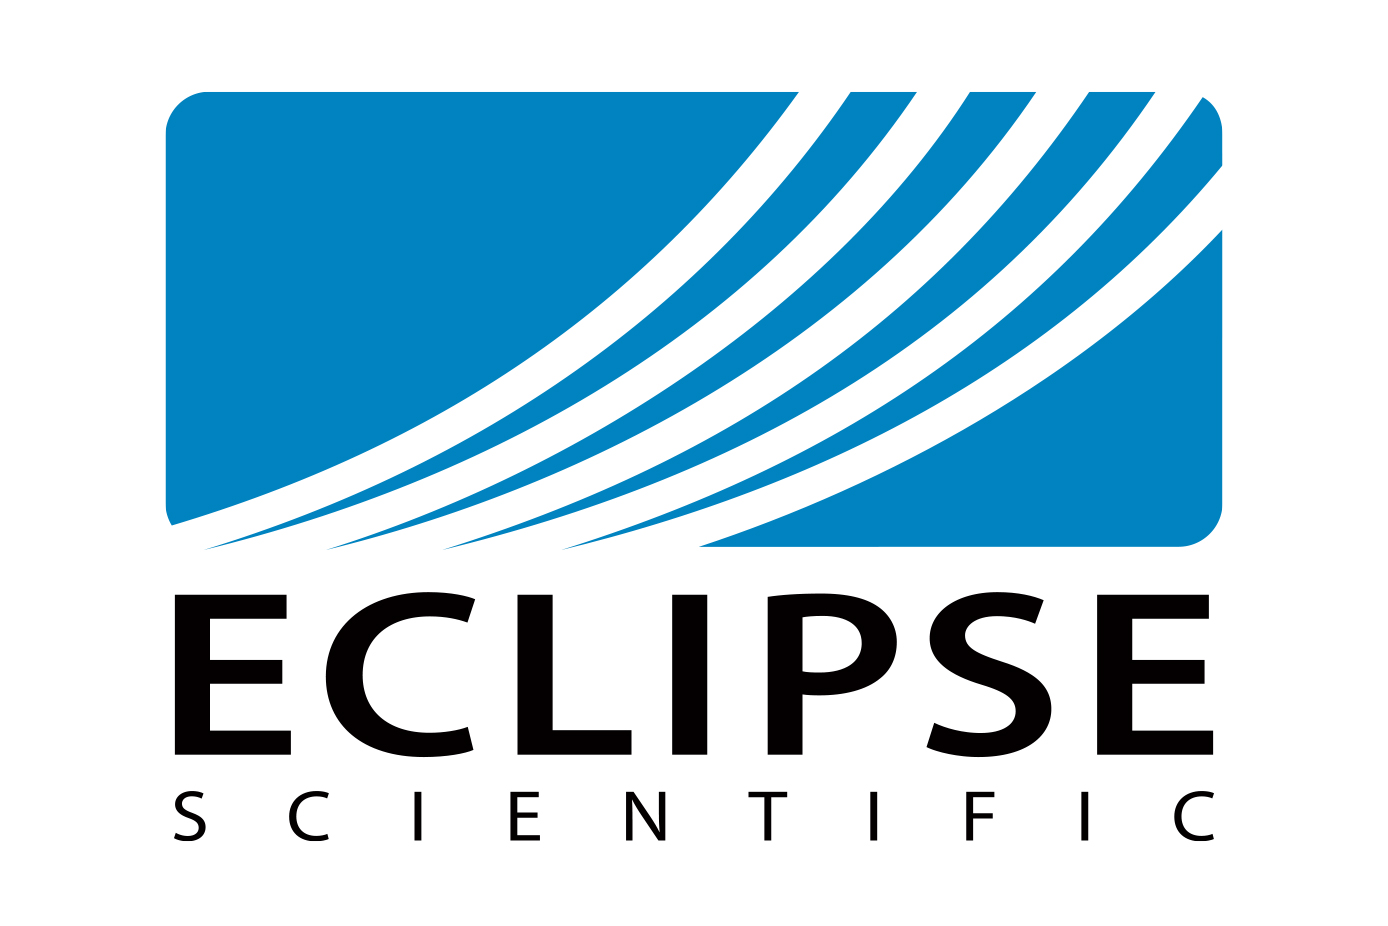 Eclipse Scientific